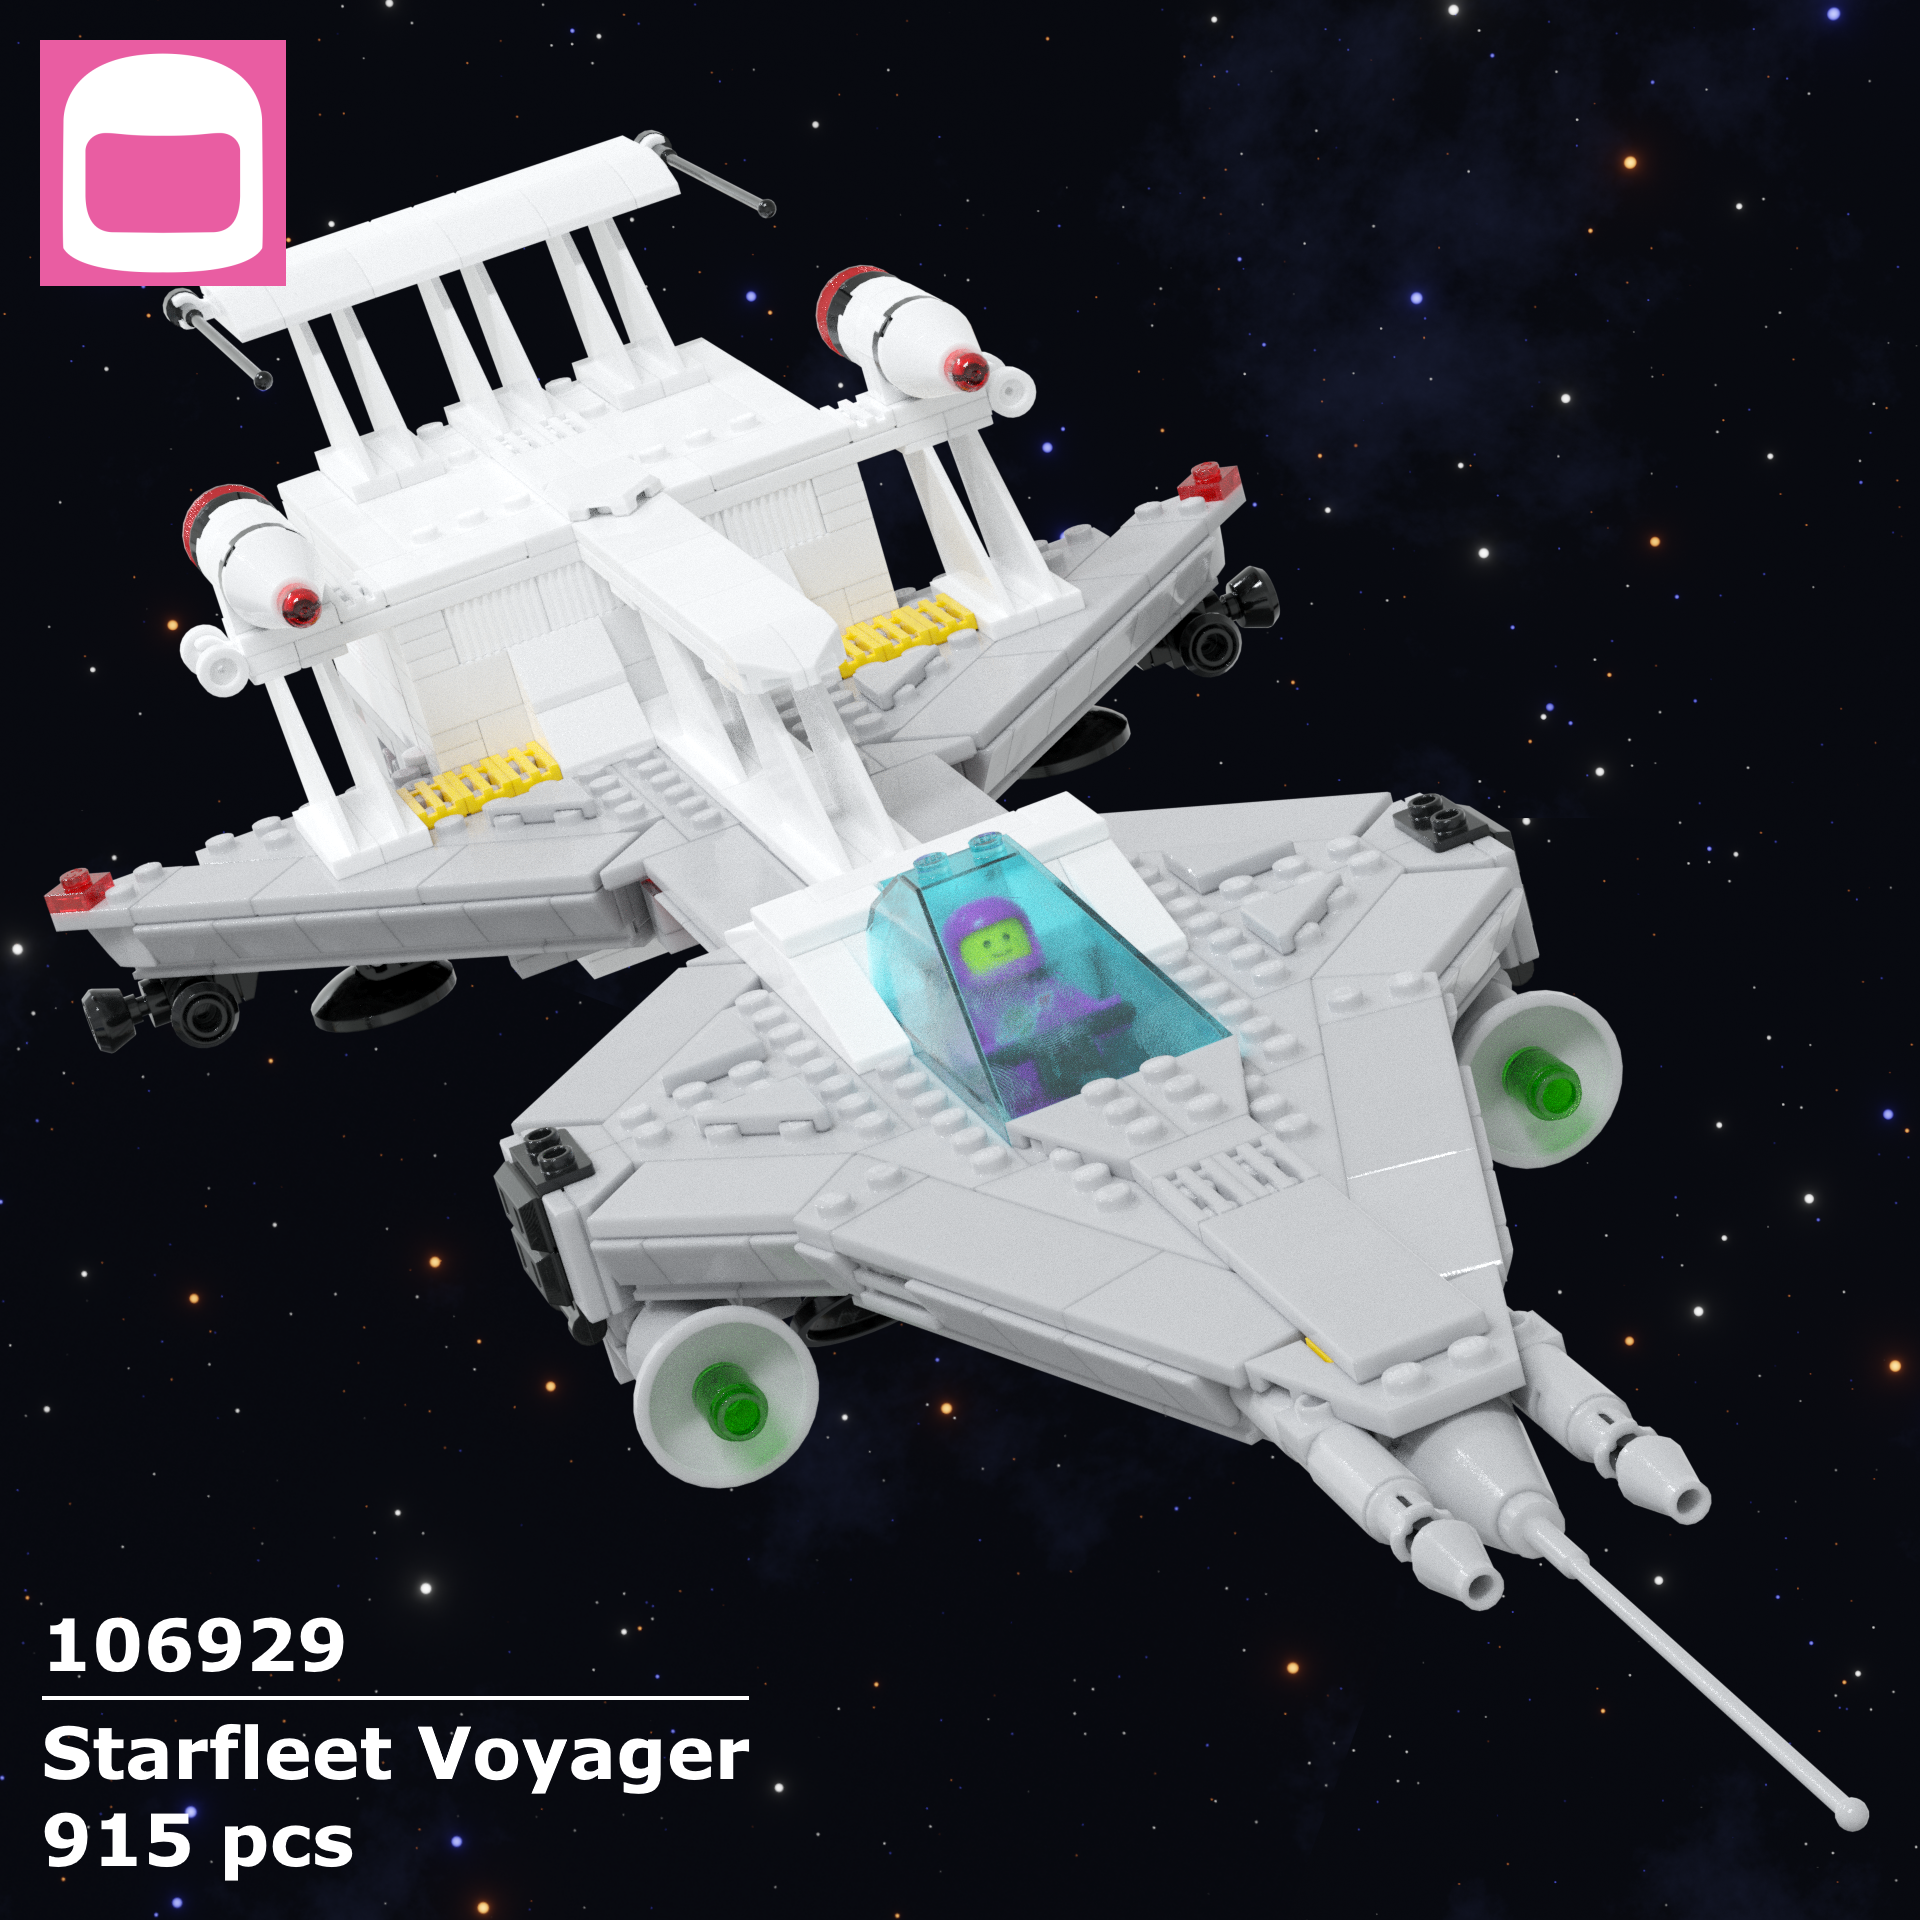 Starfleet Voyager Instructions